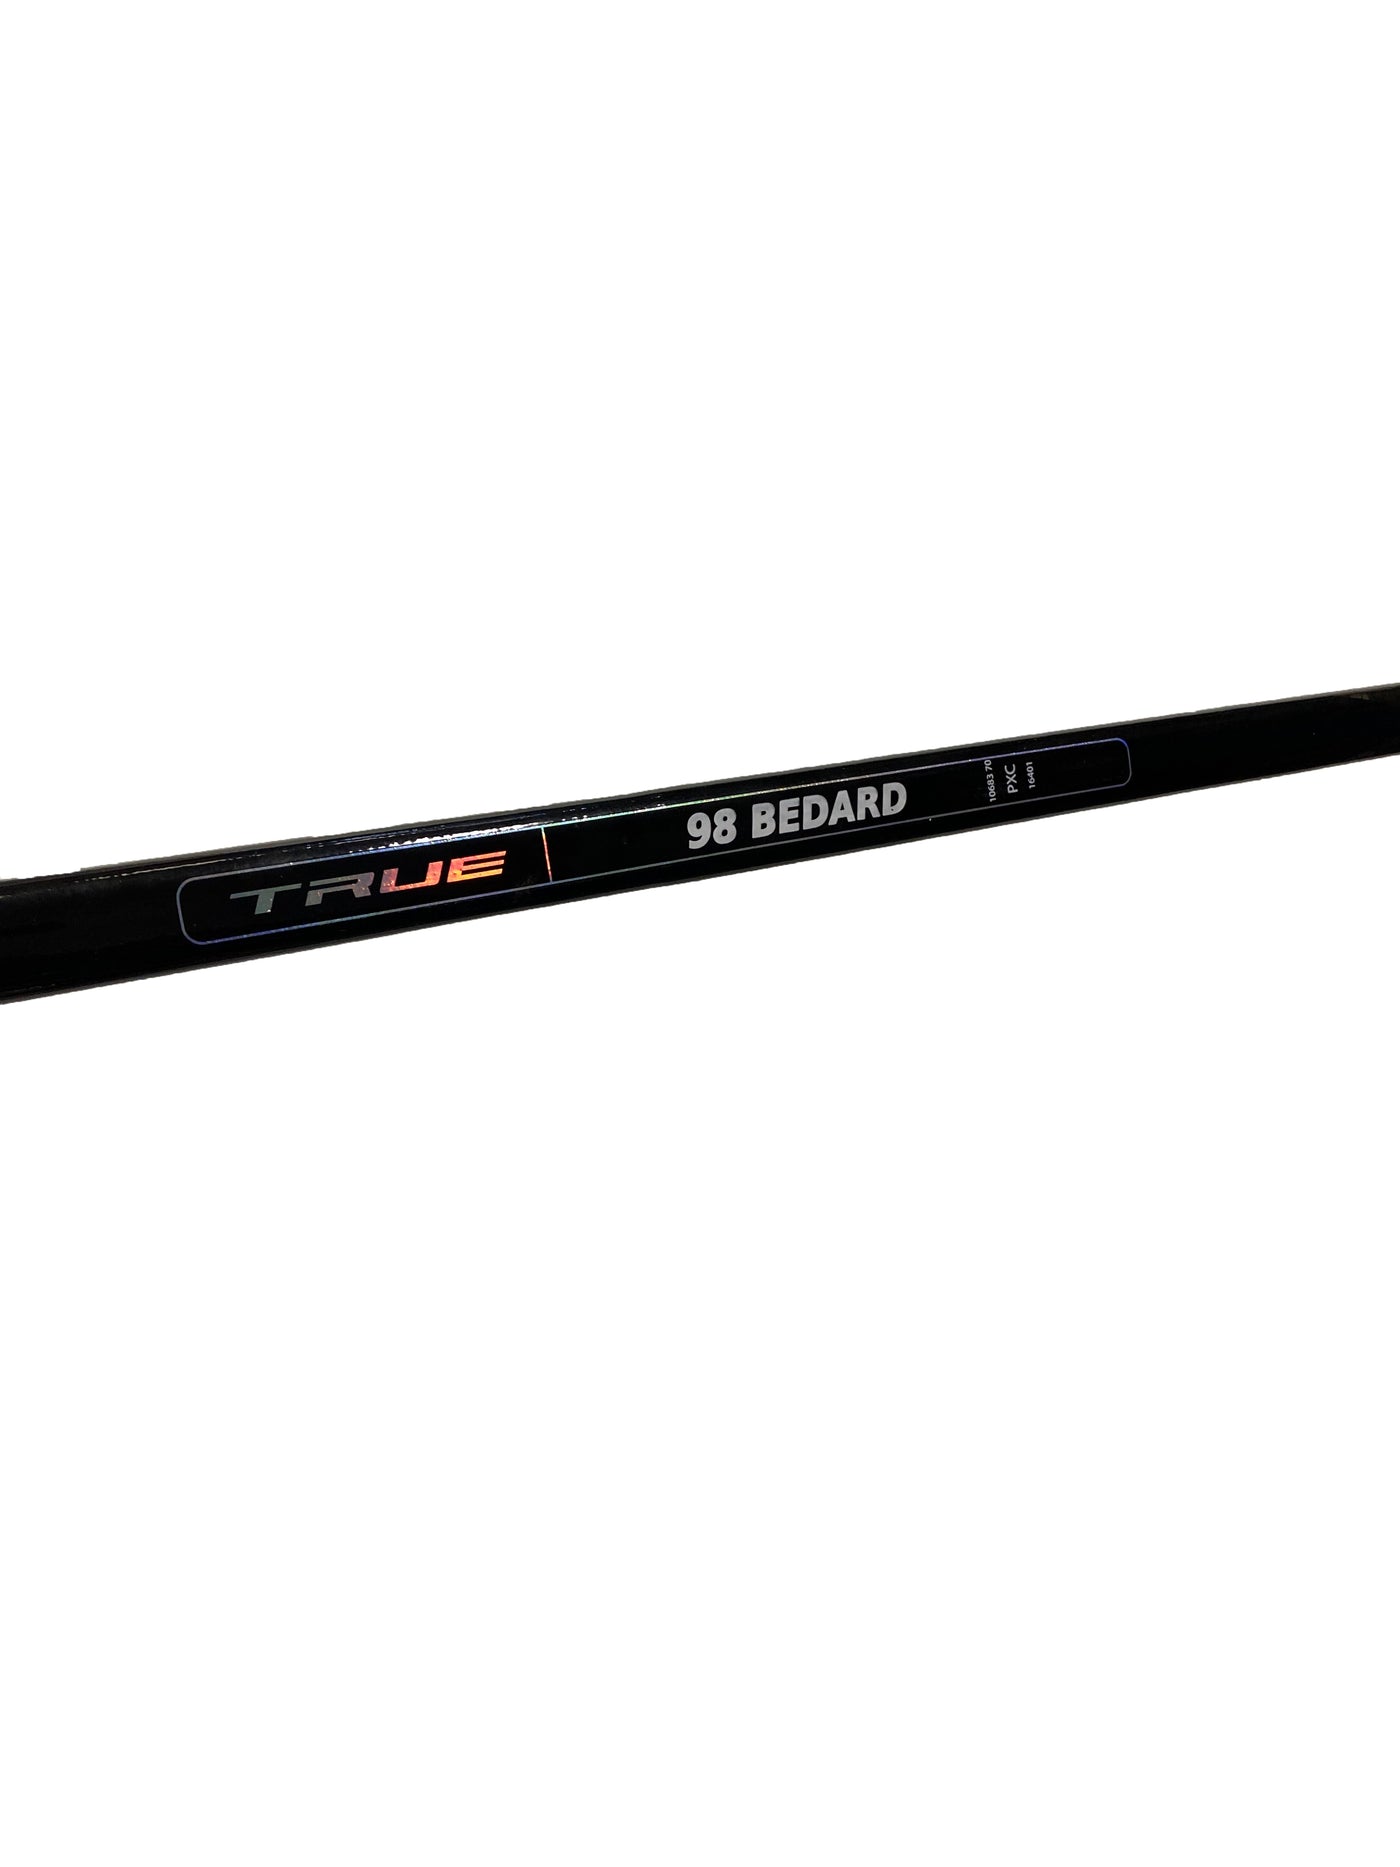 True Catalyst 9X Pro Stock Stick - CONNOR BEDARD (70flexTC2)